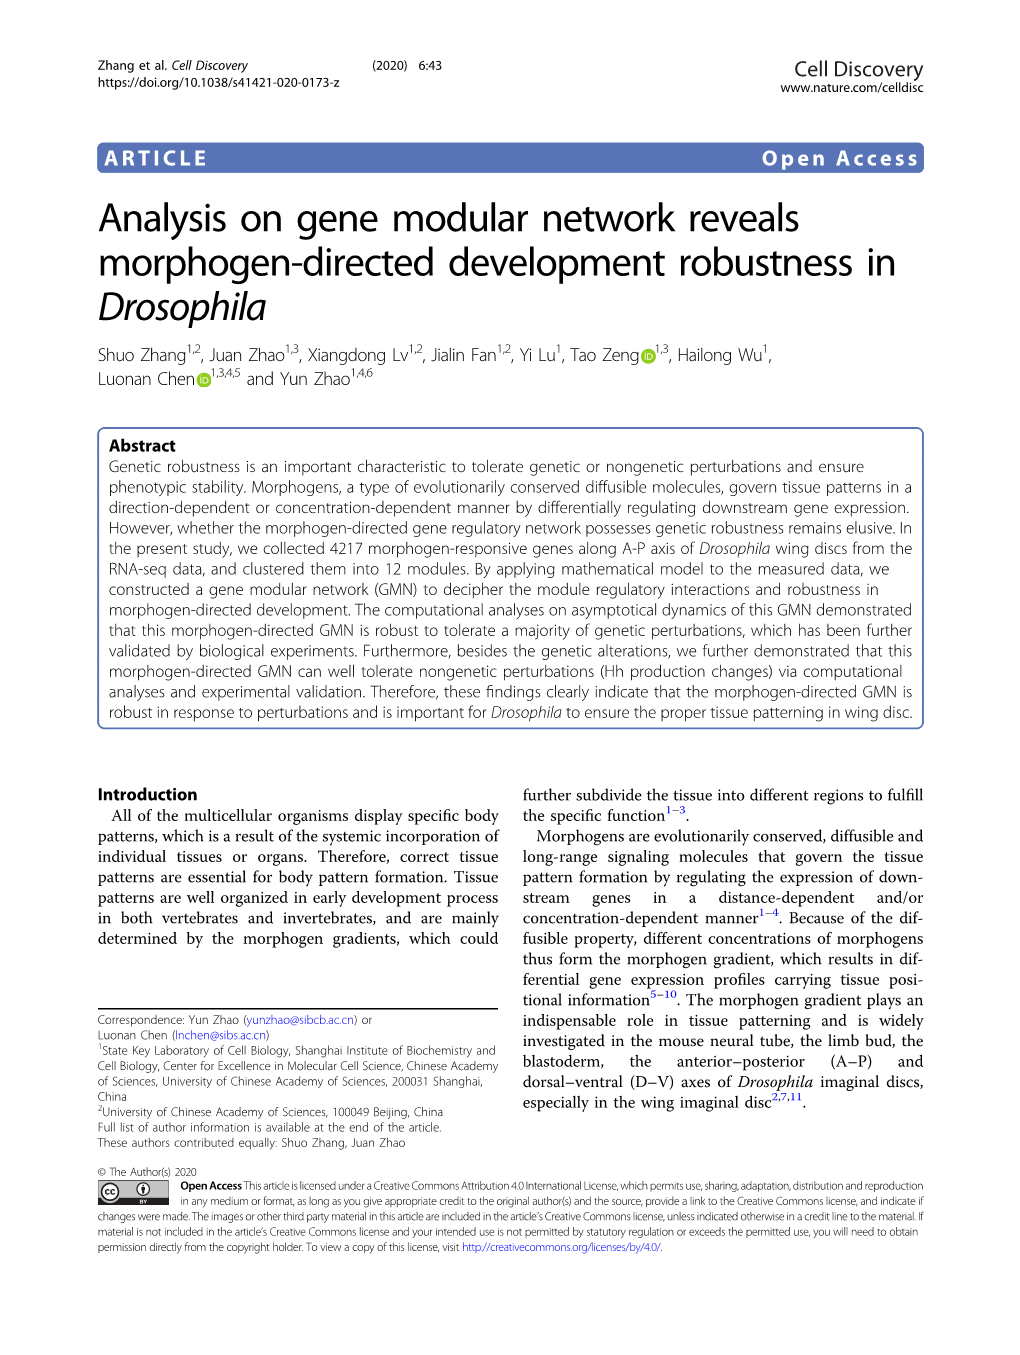 Analysis on Gene Modular Network Reveals Morphogen-Directed Development Robustness in Drosophila